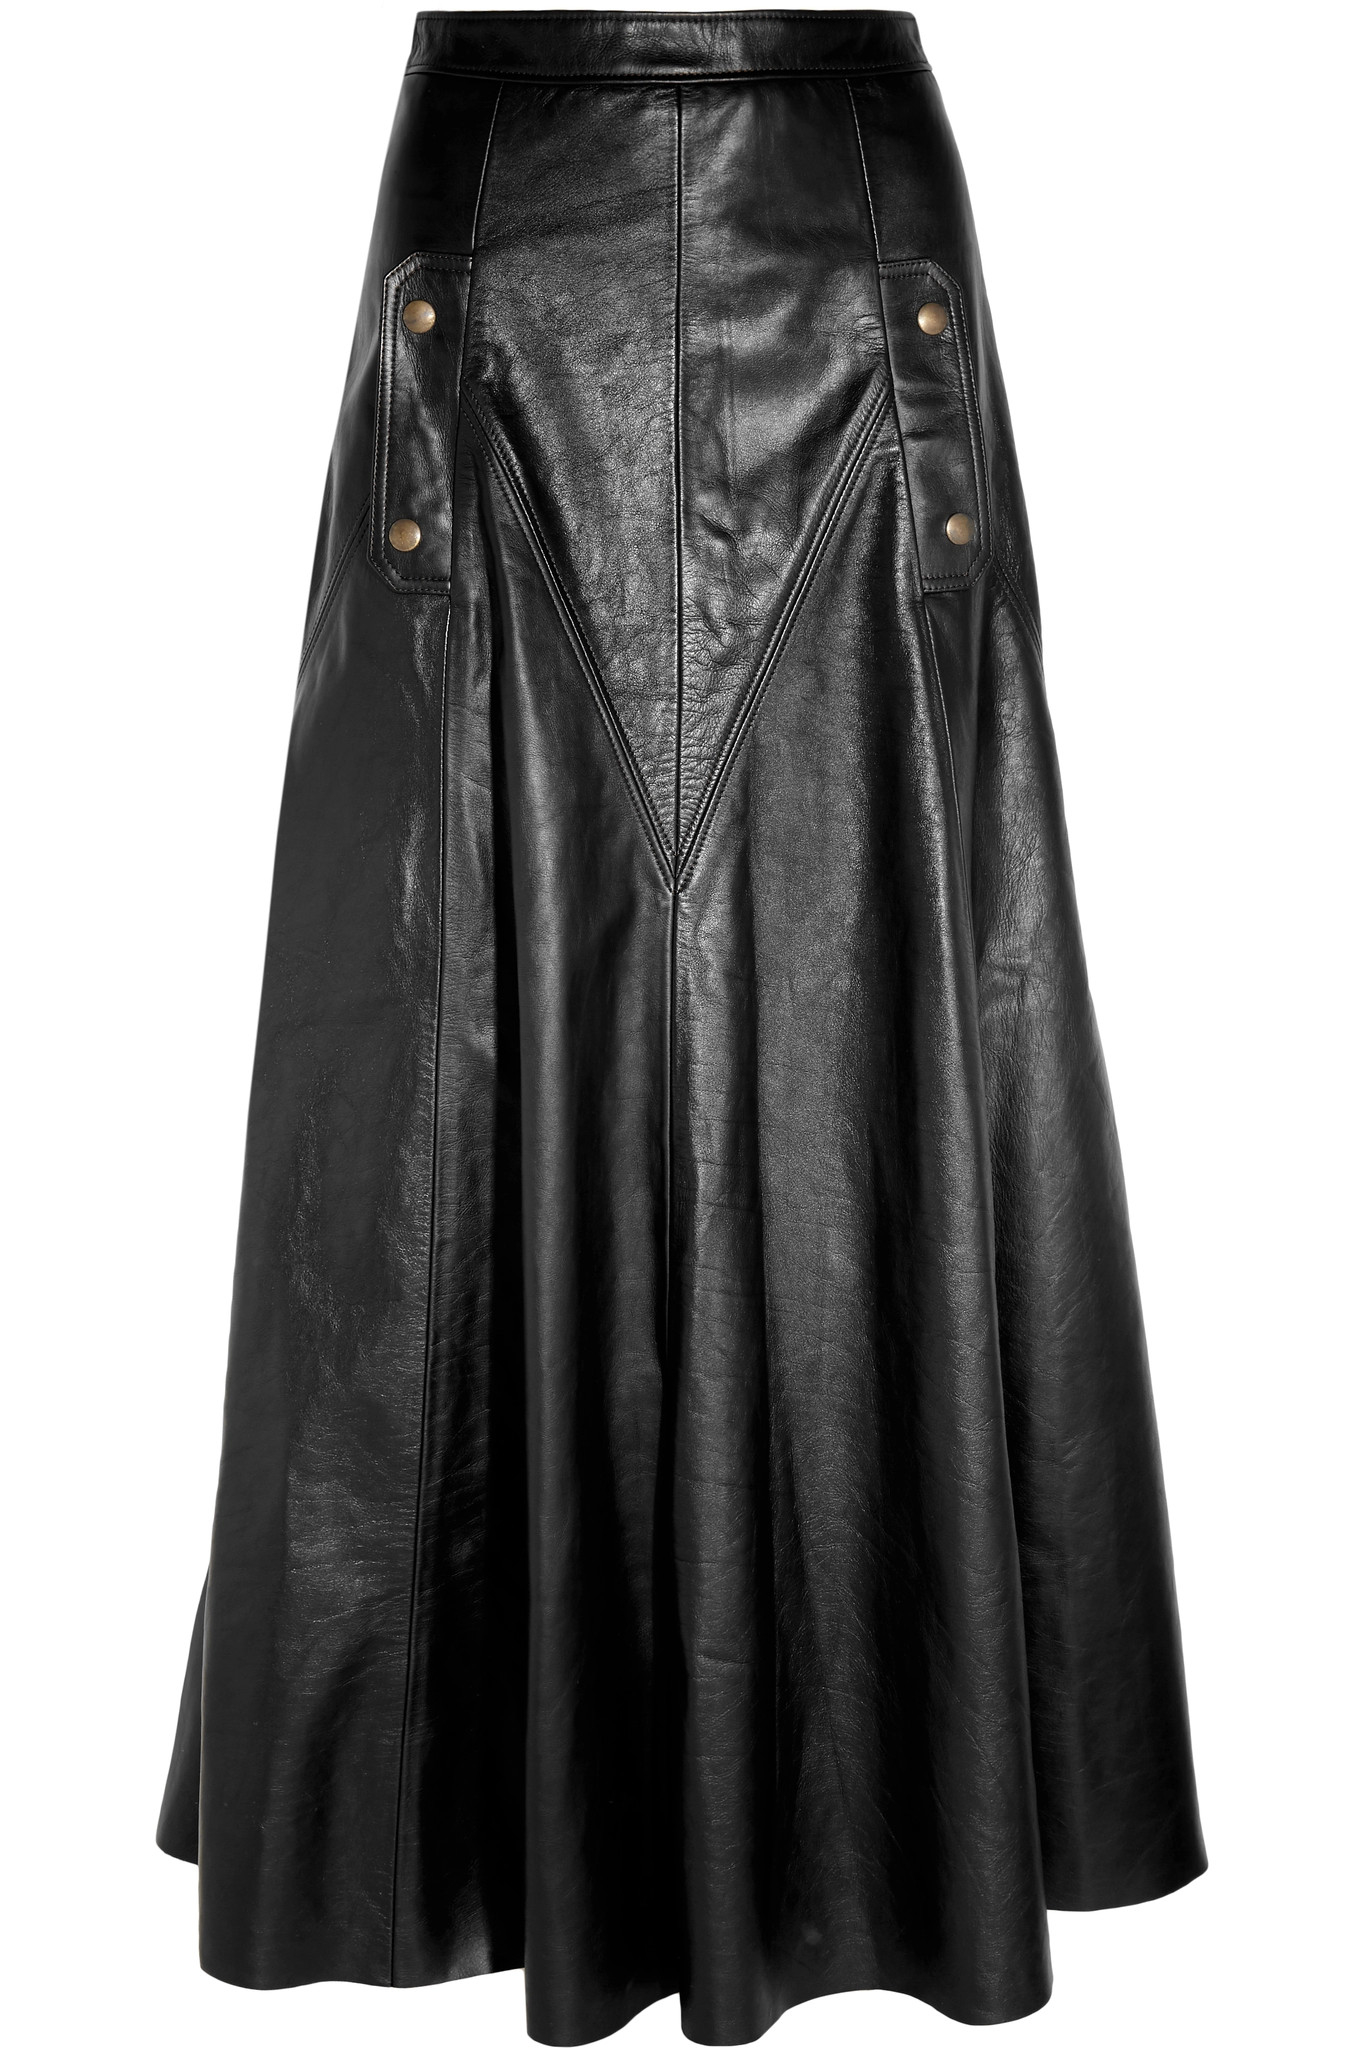 Lyst - Chloé Leather Maxi Skirt in Black